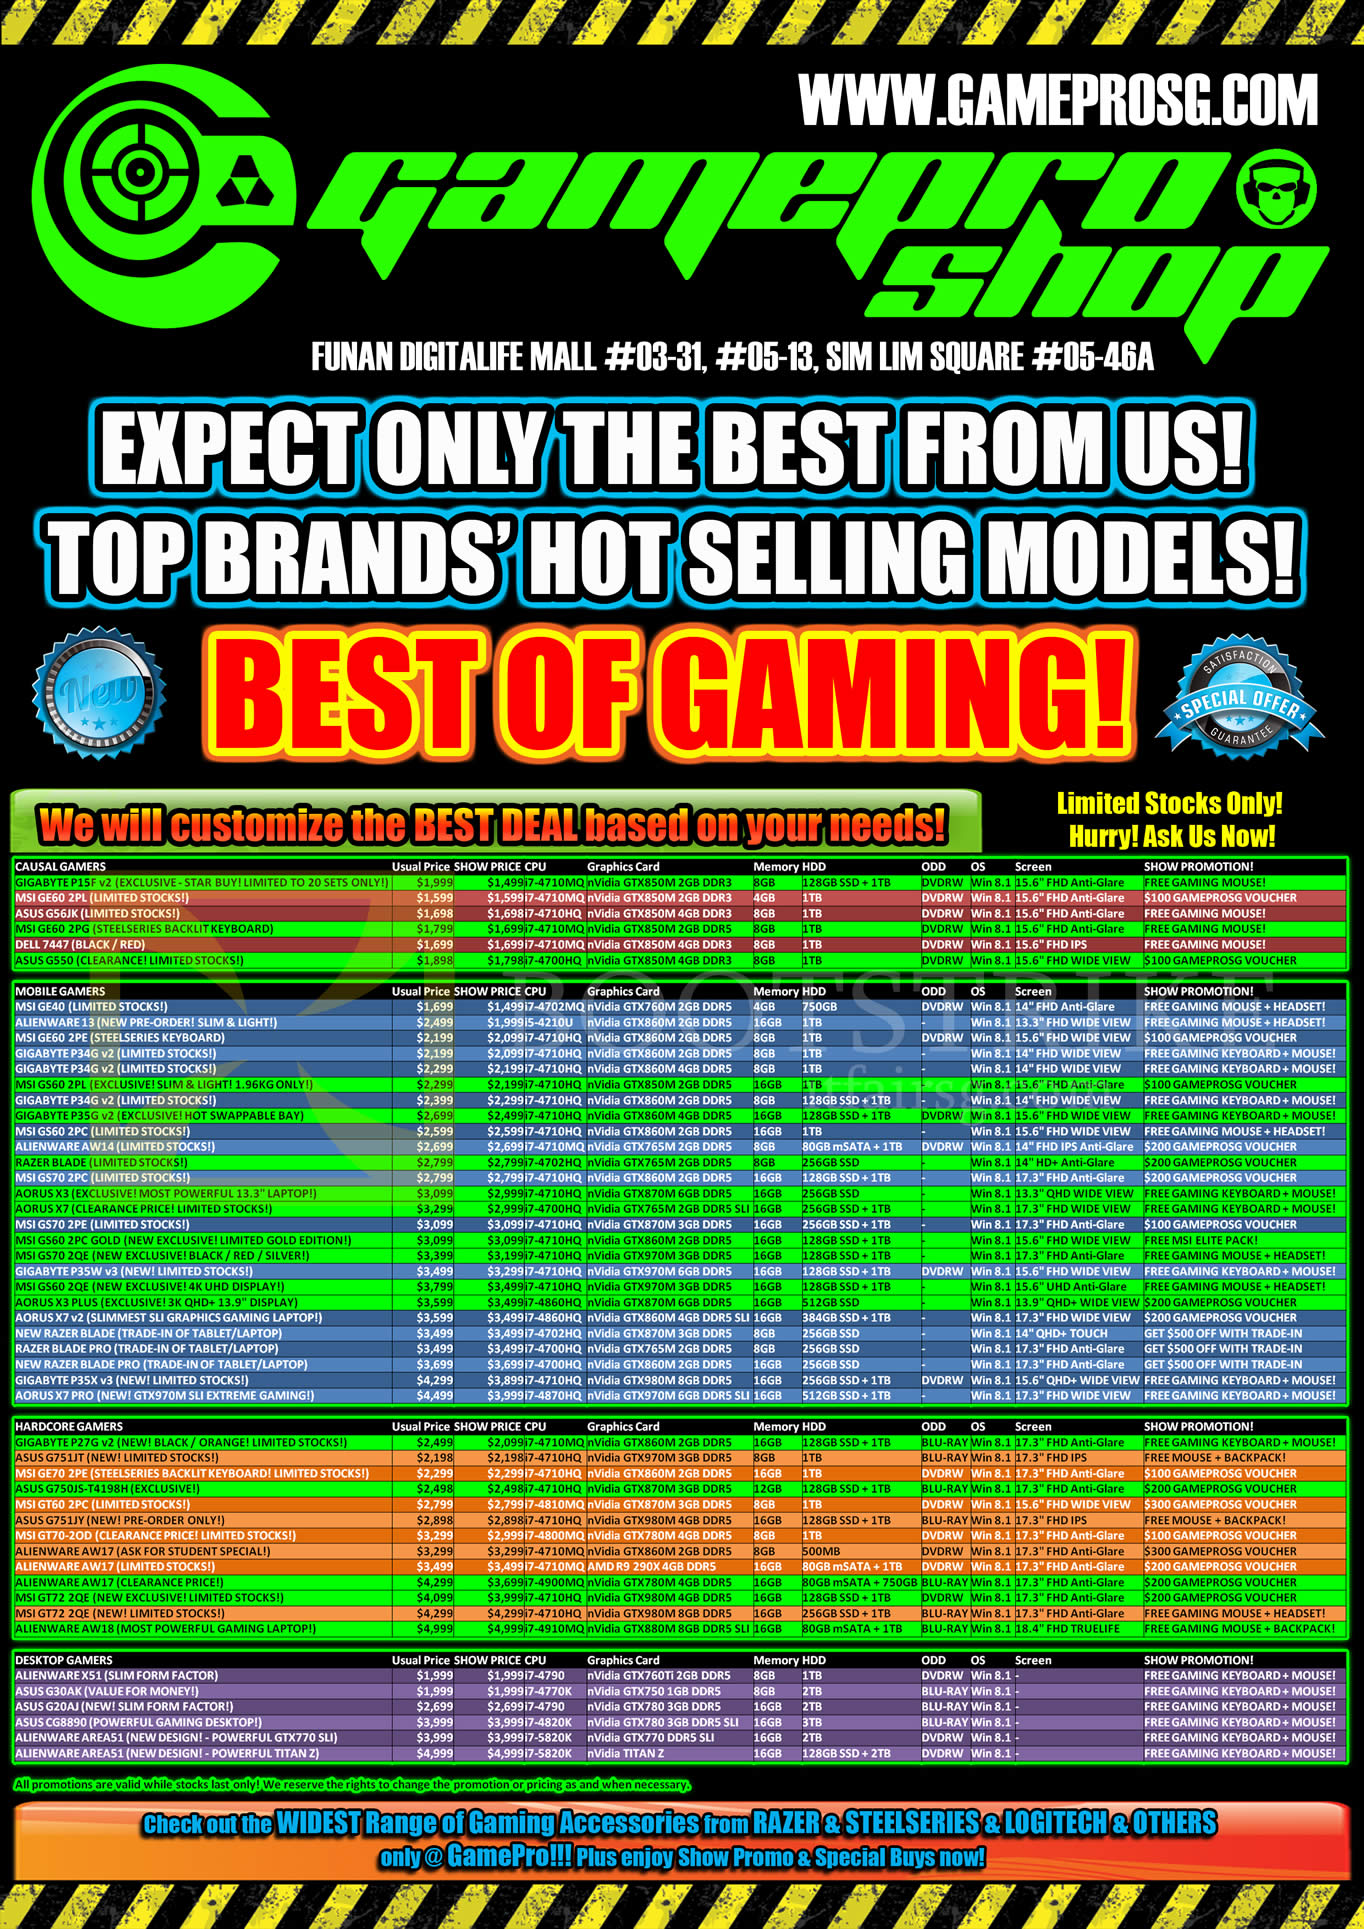 SITEX 2014 price list image brochure of Gamepro Notebooks MSI, Gigabyte, Dell Alienware, Aorous, ASUS, Casual, Mobile, Hardcore, Desktop